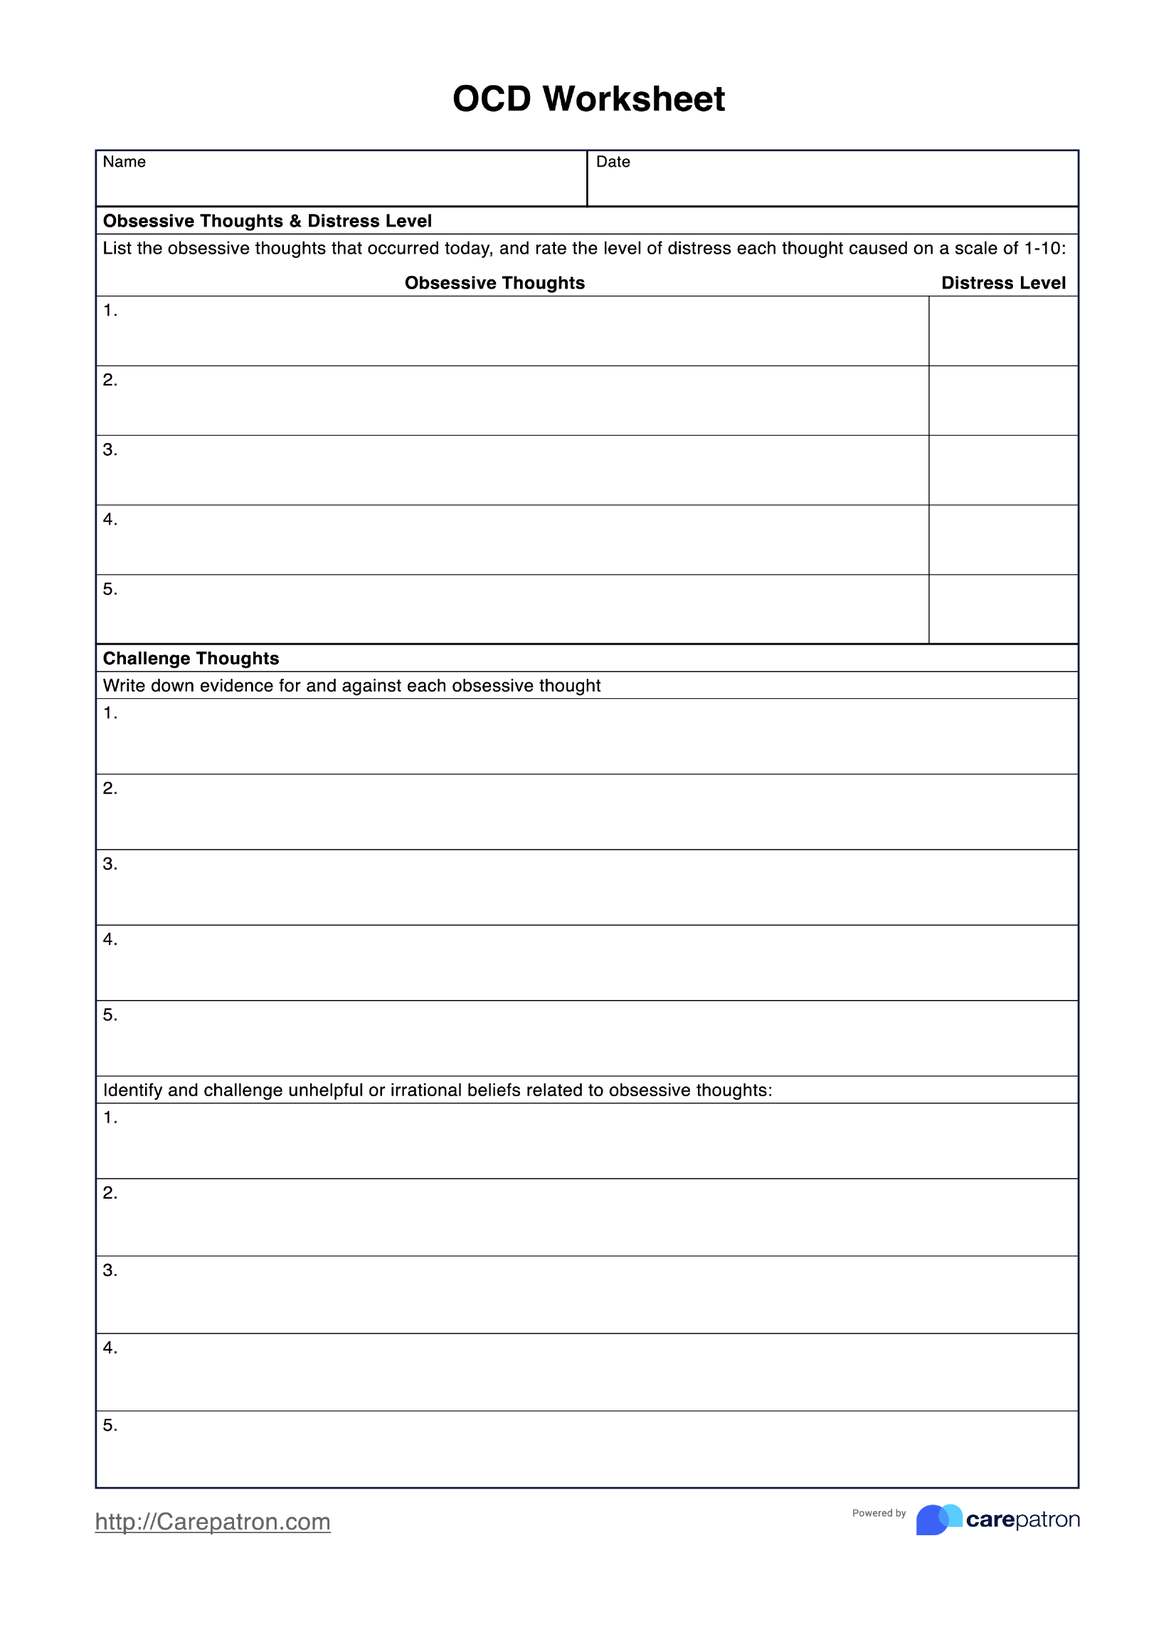 OCD Worksheets PDF Example